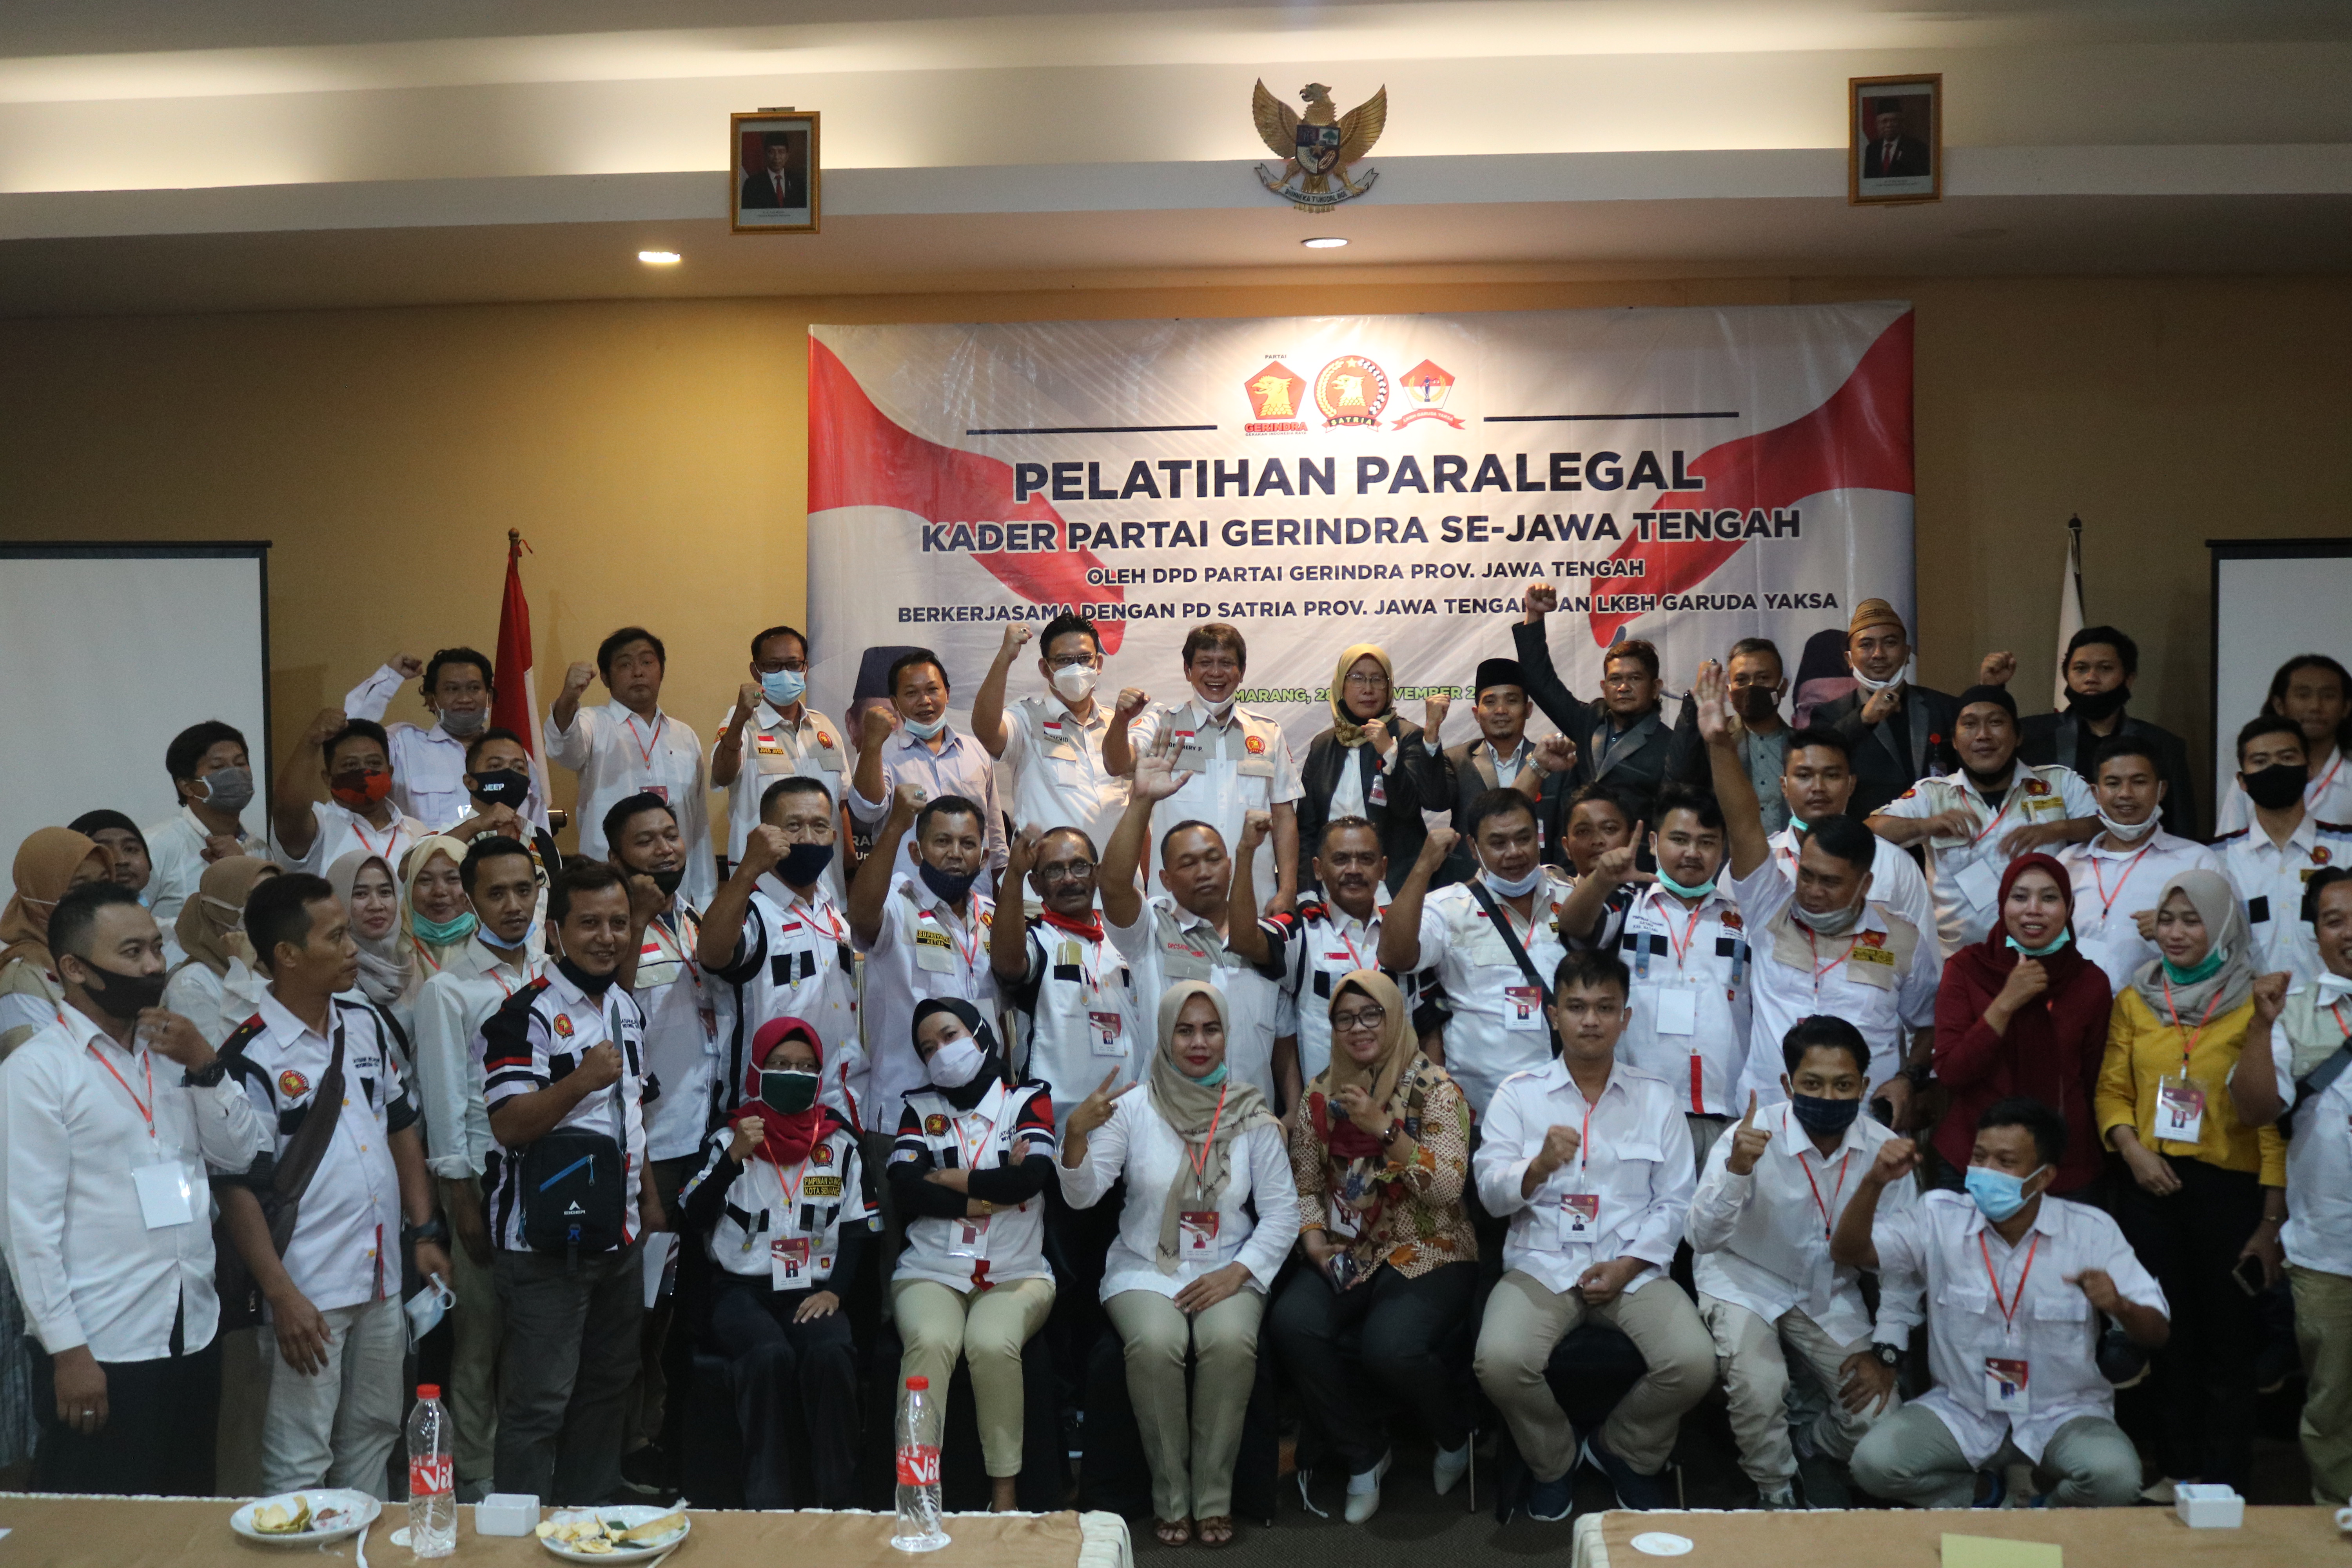 Pelatihan Paralegal Lembaga Konsultasi & Bantuan Hukum (LKBH) Garuda Yaksa | Pimpinan Daerah (PD) Satuan Relawan Indonesia Raya (SATRIA) Partai Gerindra Provinsi Jawa Tengah 